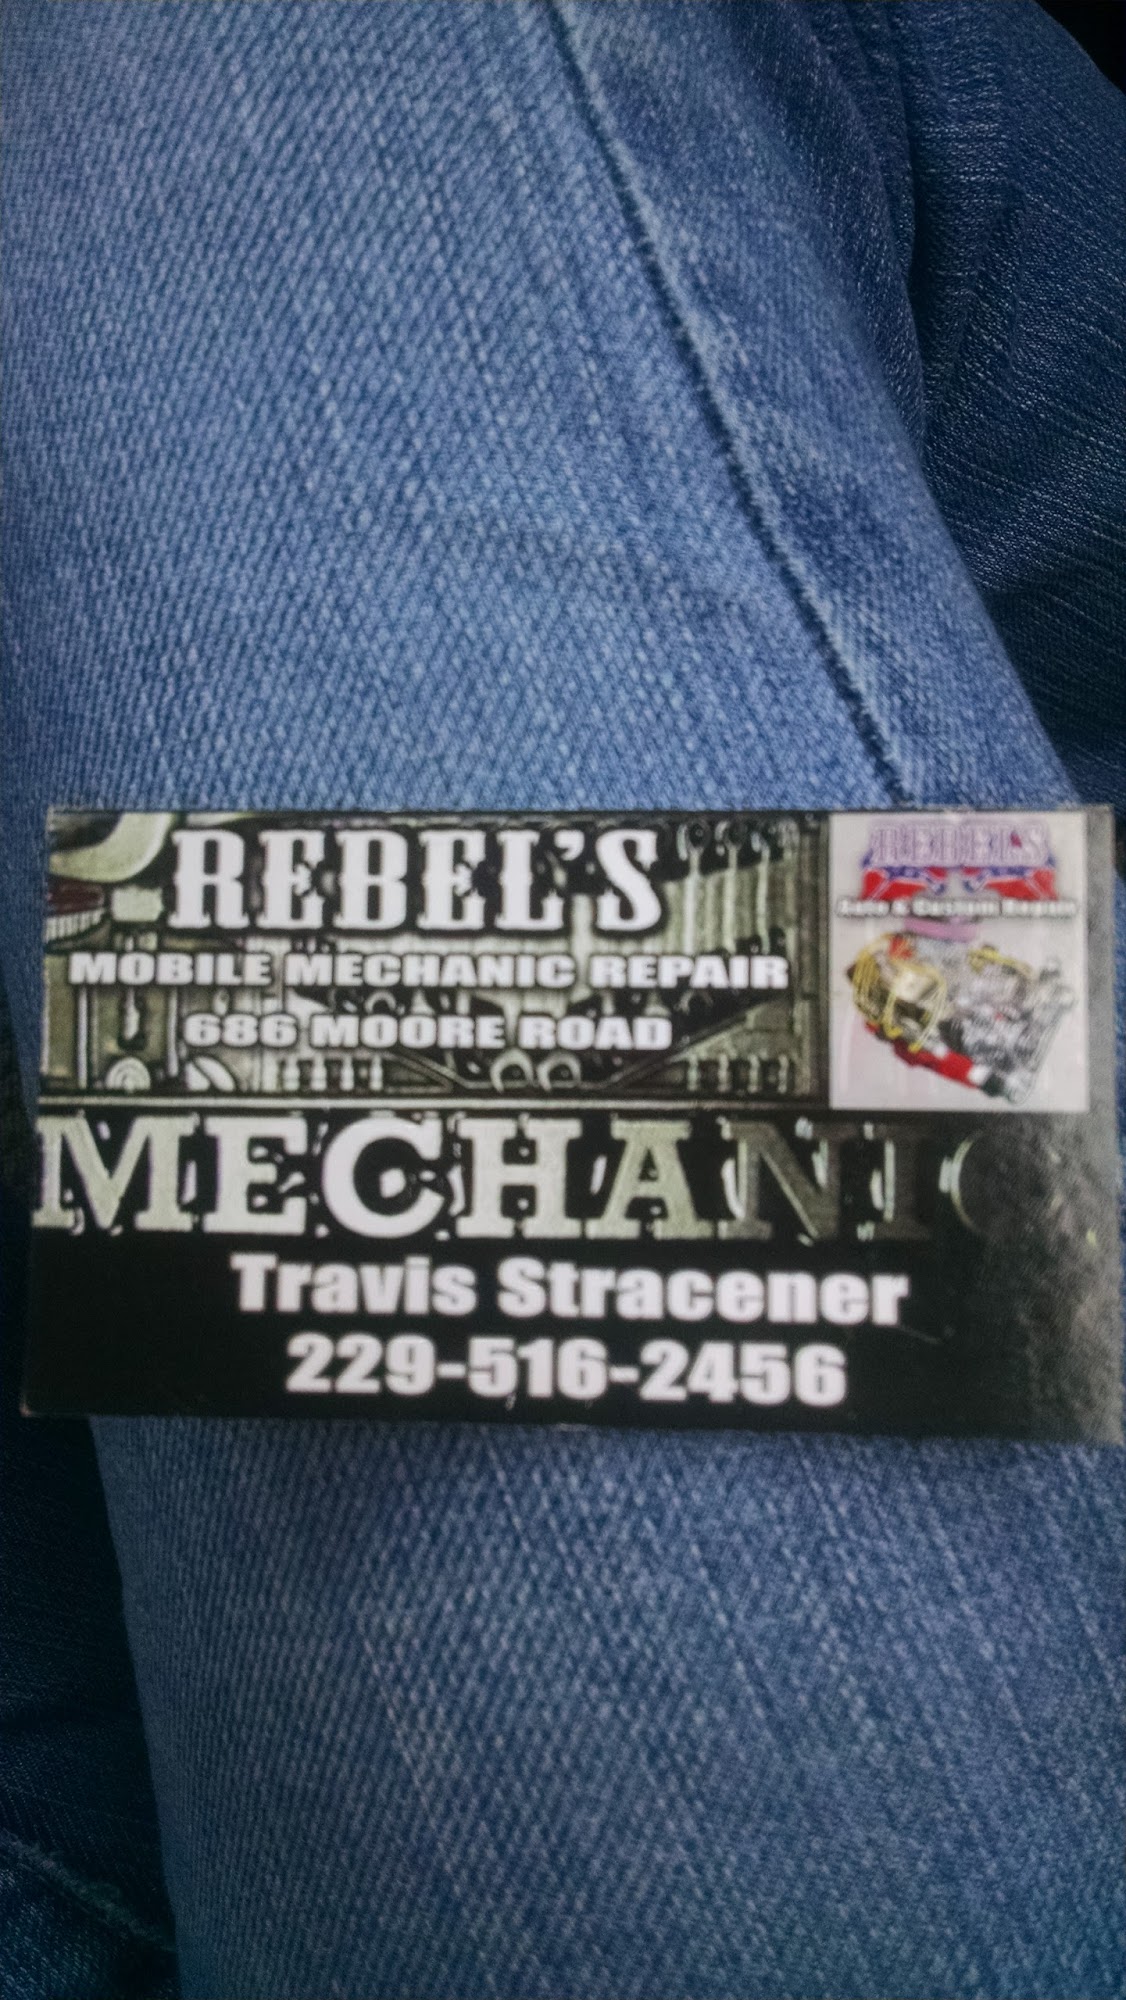 Rebels Mobile Mechanic